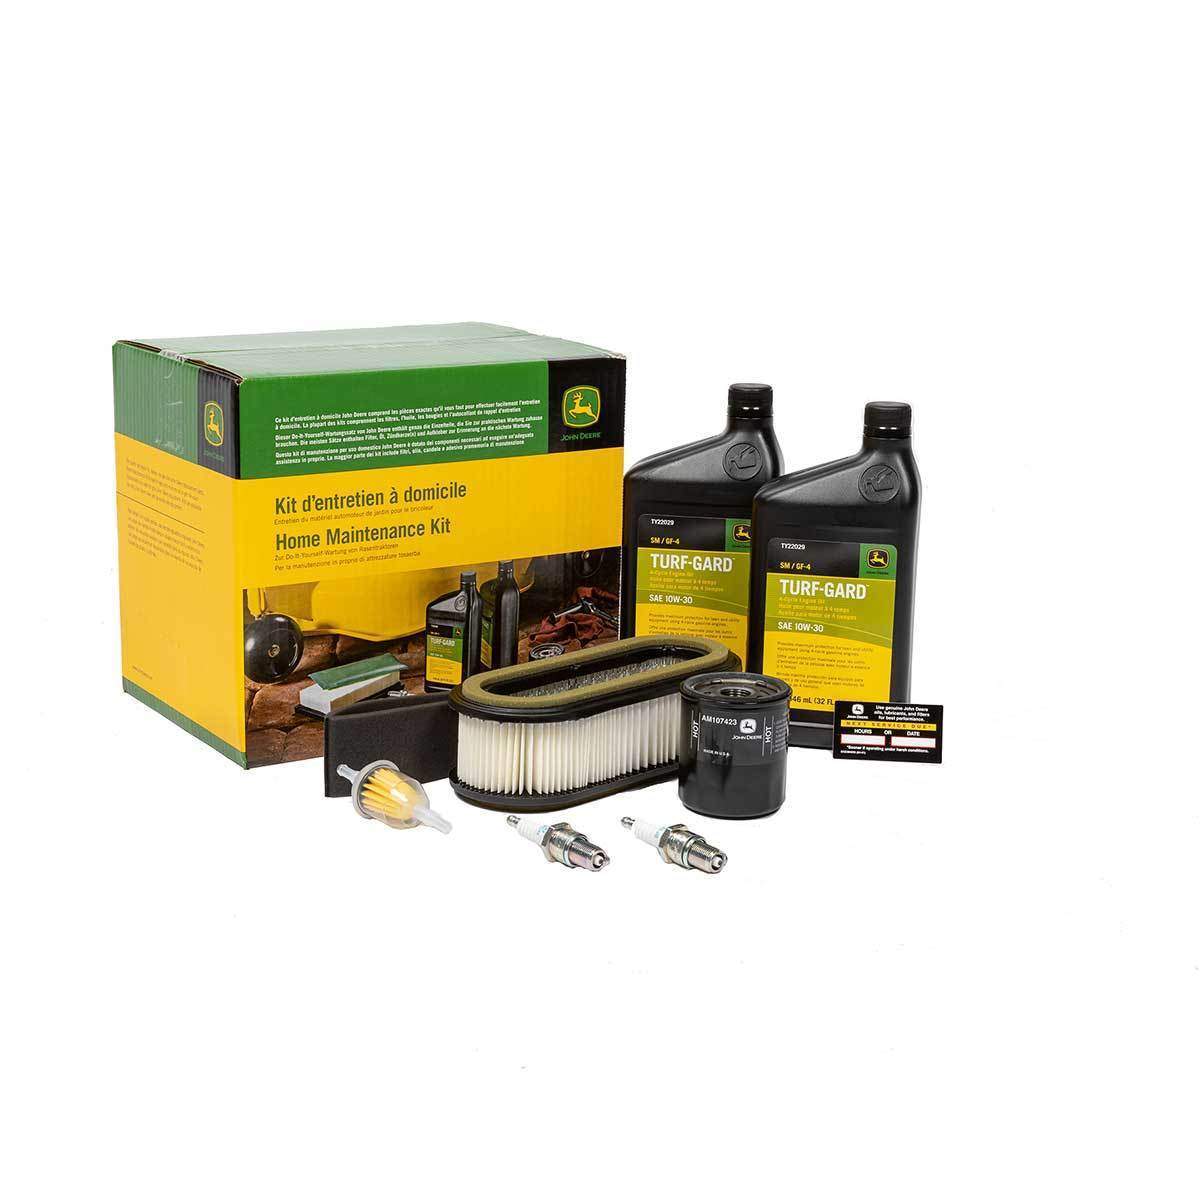 John Deere Home Maintenance Kit LG238 - Green Farm Parts